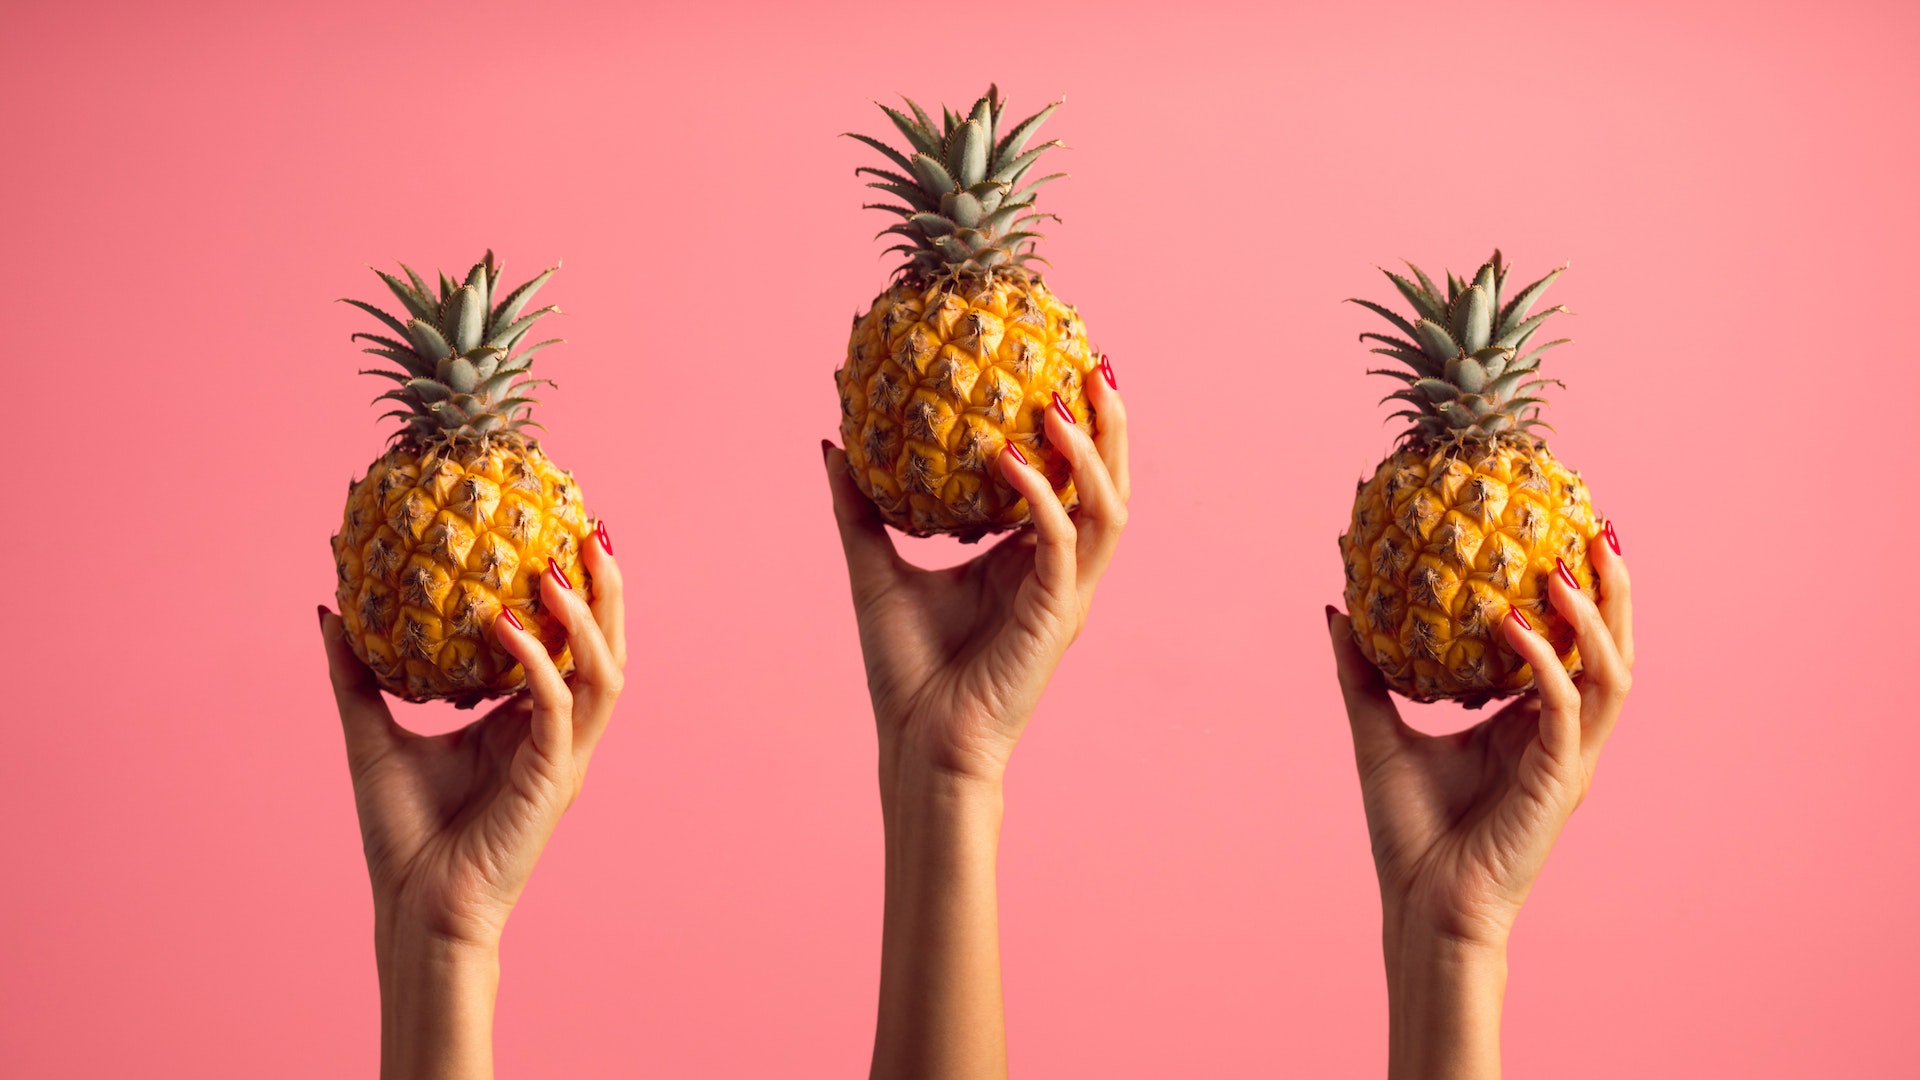 Three hands holding up three pineapples